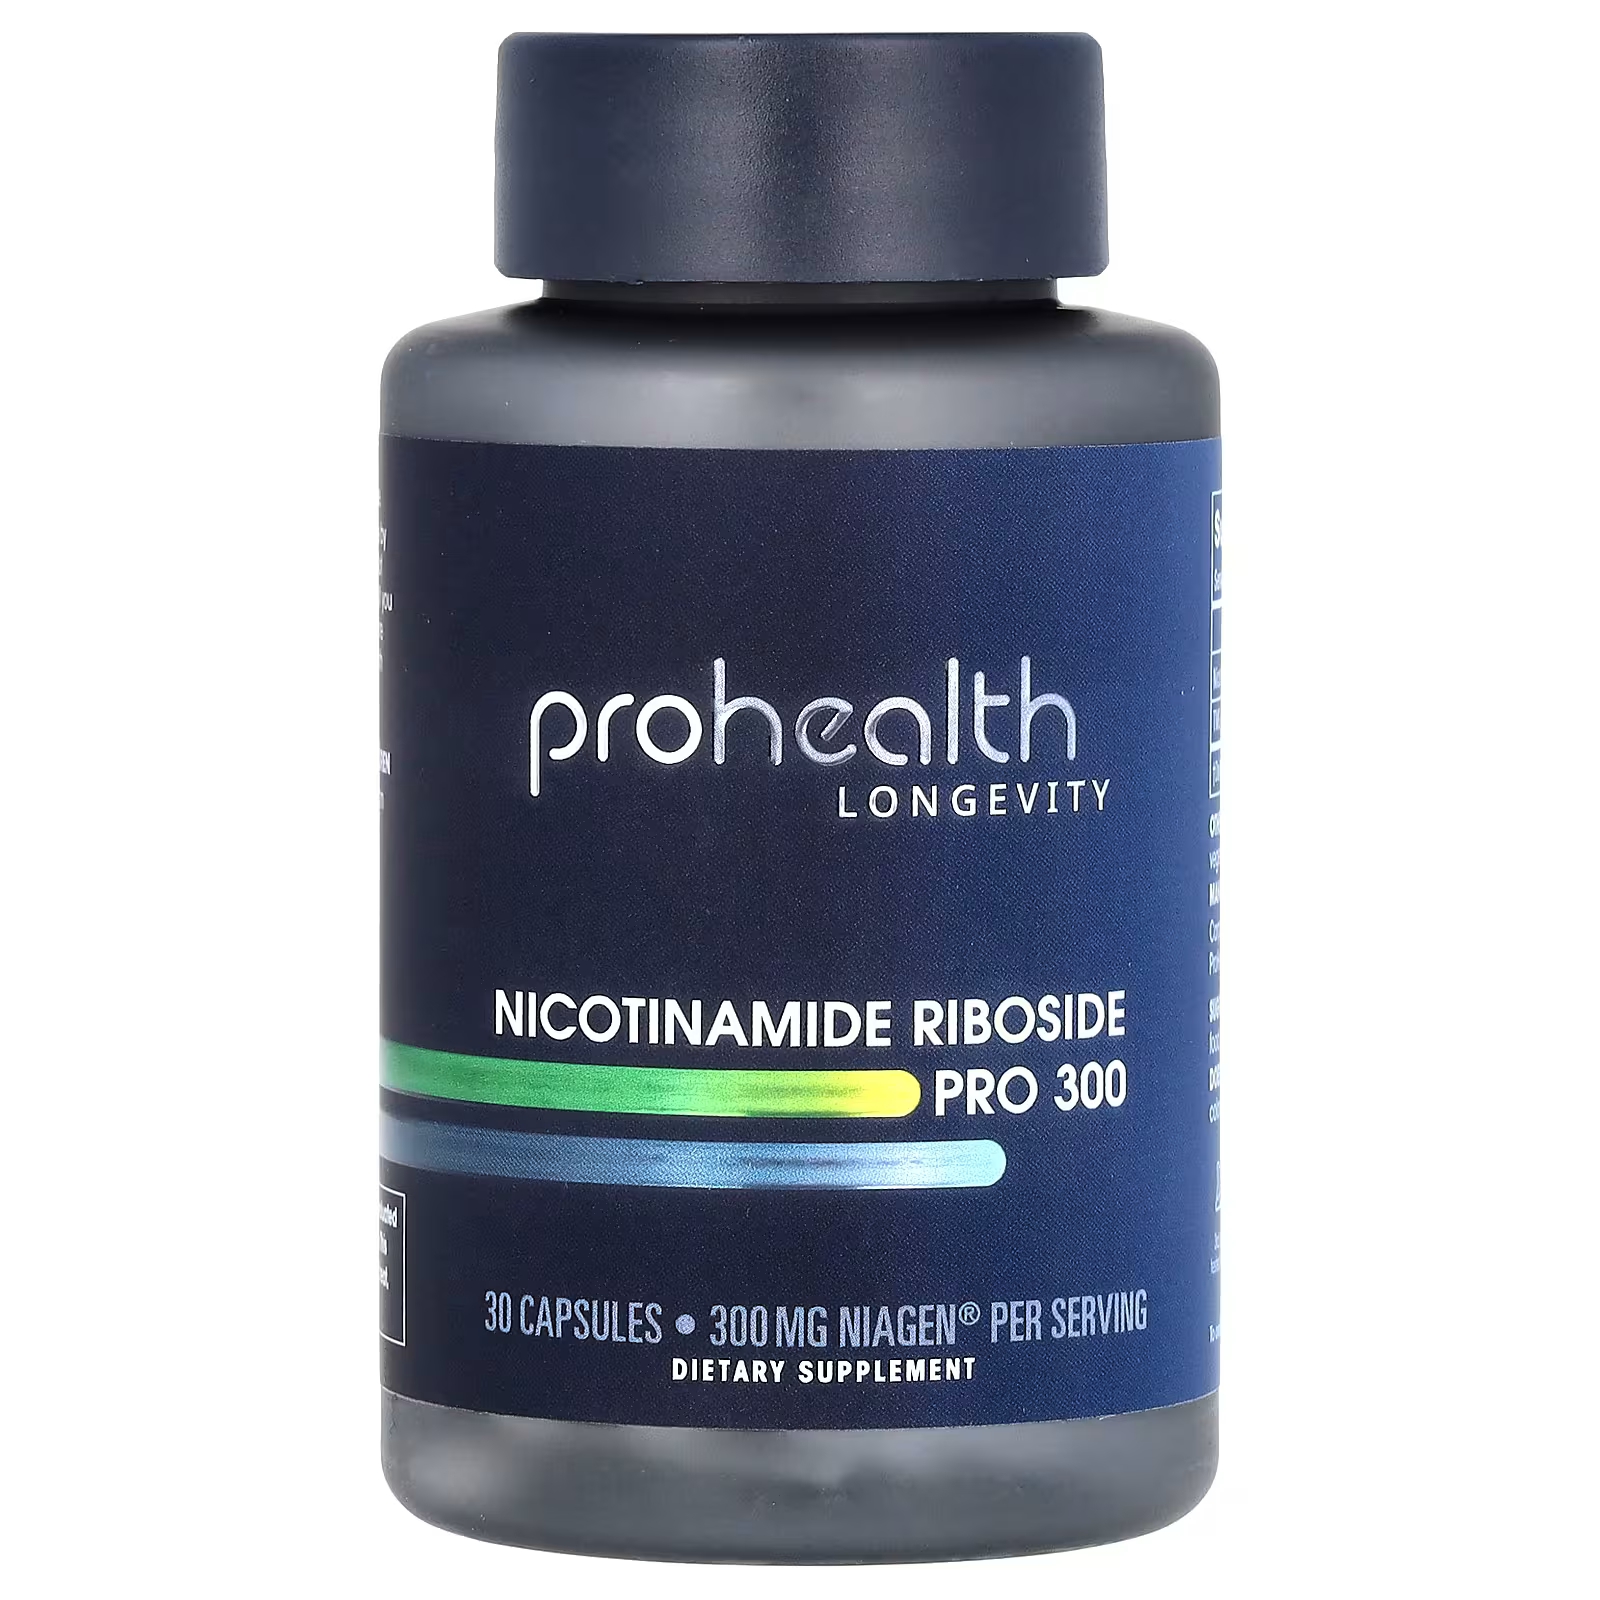 ProHealth Longevity Никотинамид рибозид Pro 300 300 мг 30 капсул prohealth longevity никотинамид рибозид про 300 30 капсул